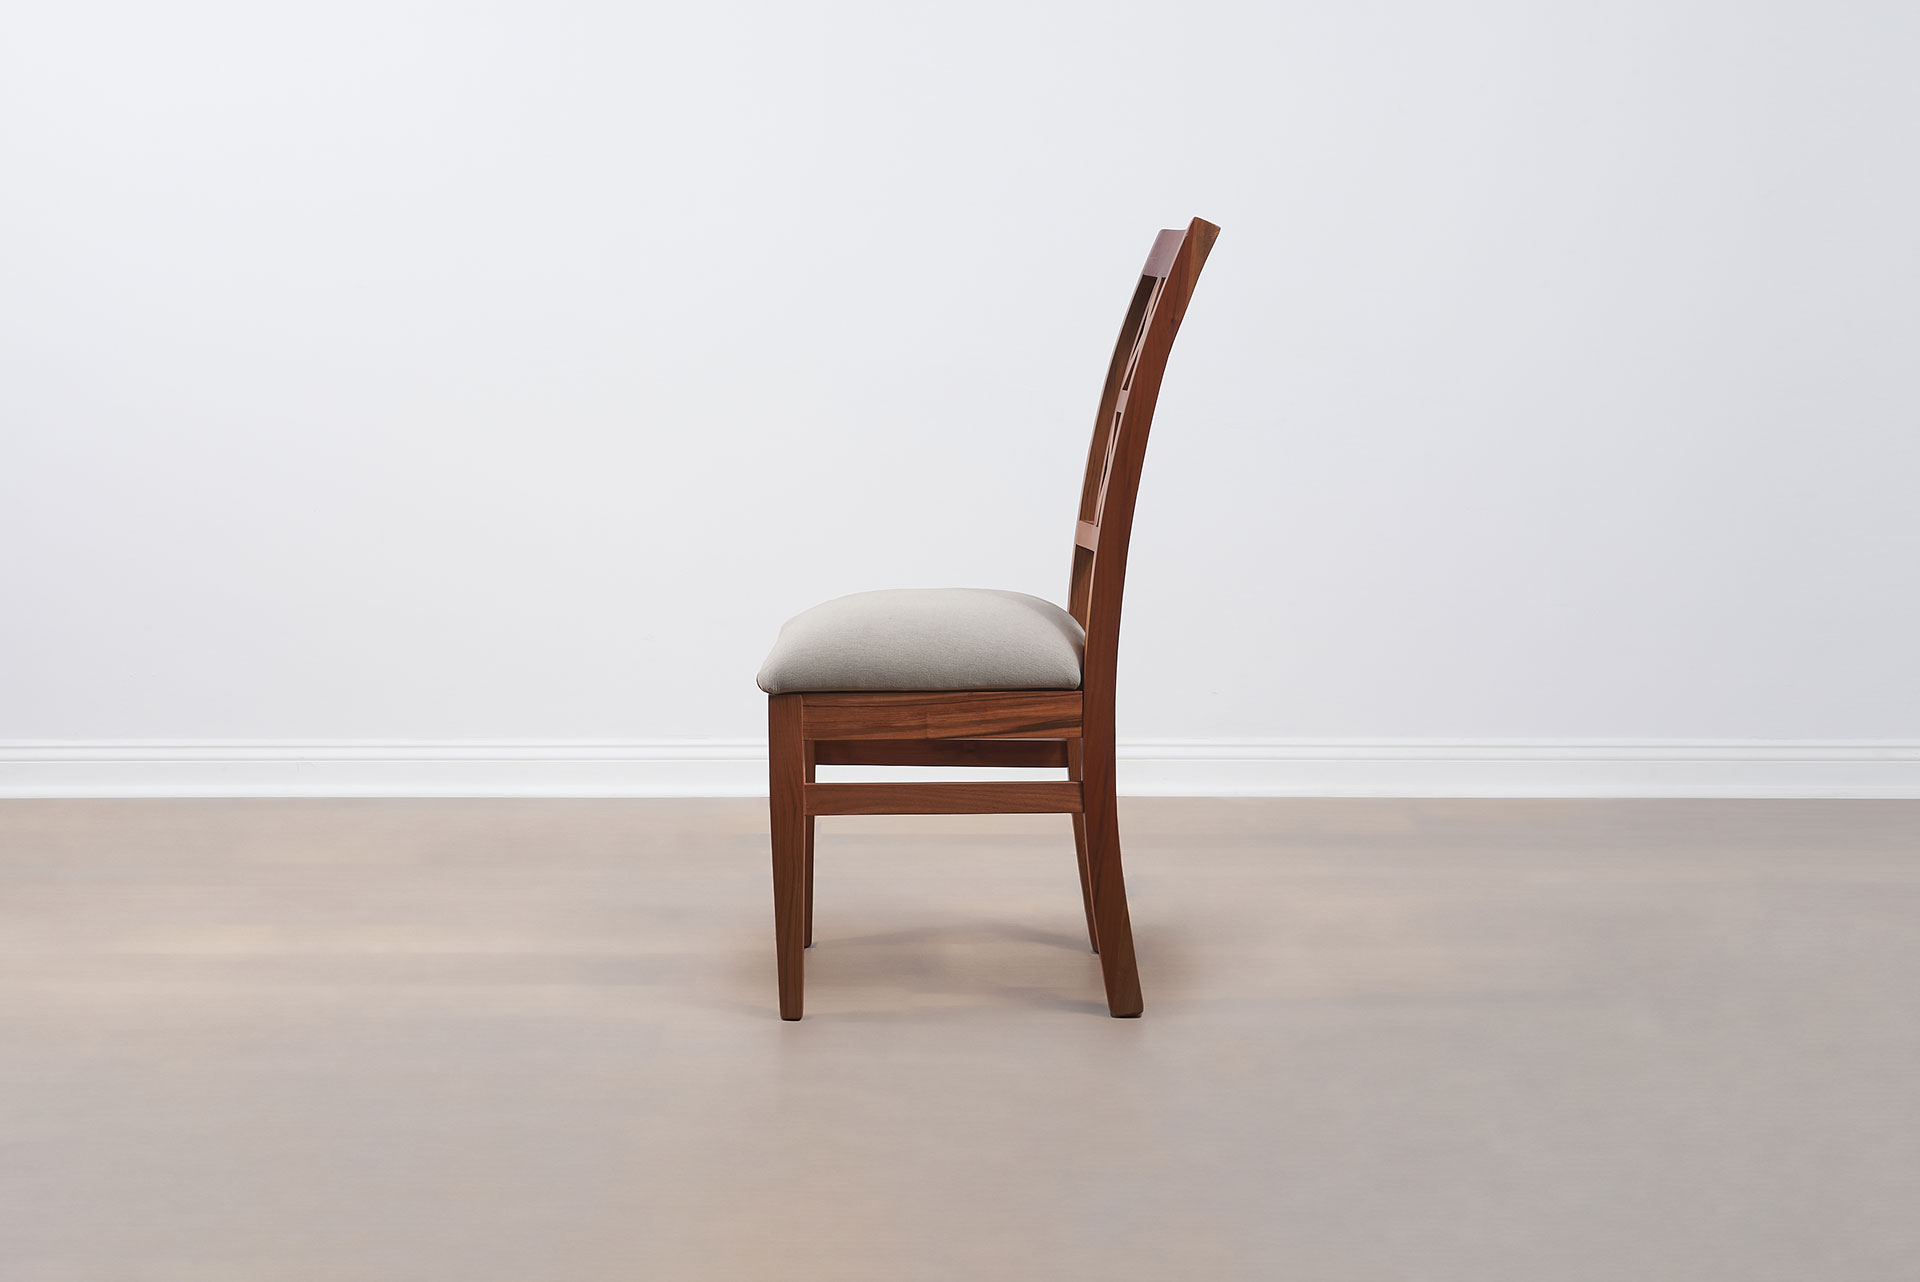 Muebles-Santander_Silla-Paris_4604_silla_madera_textil